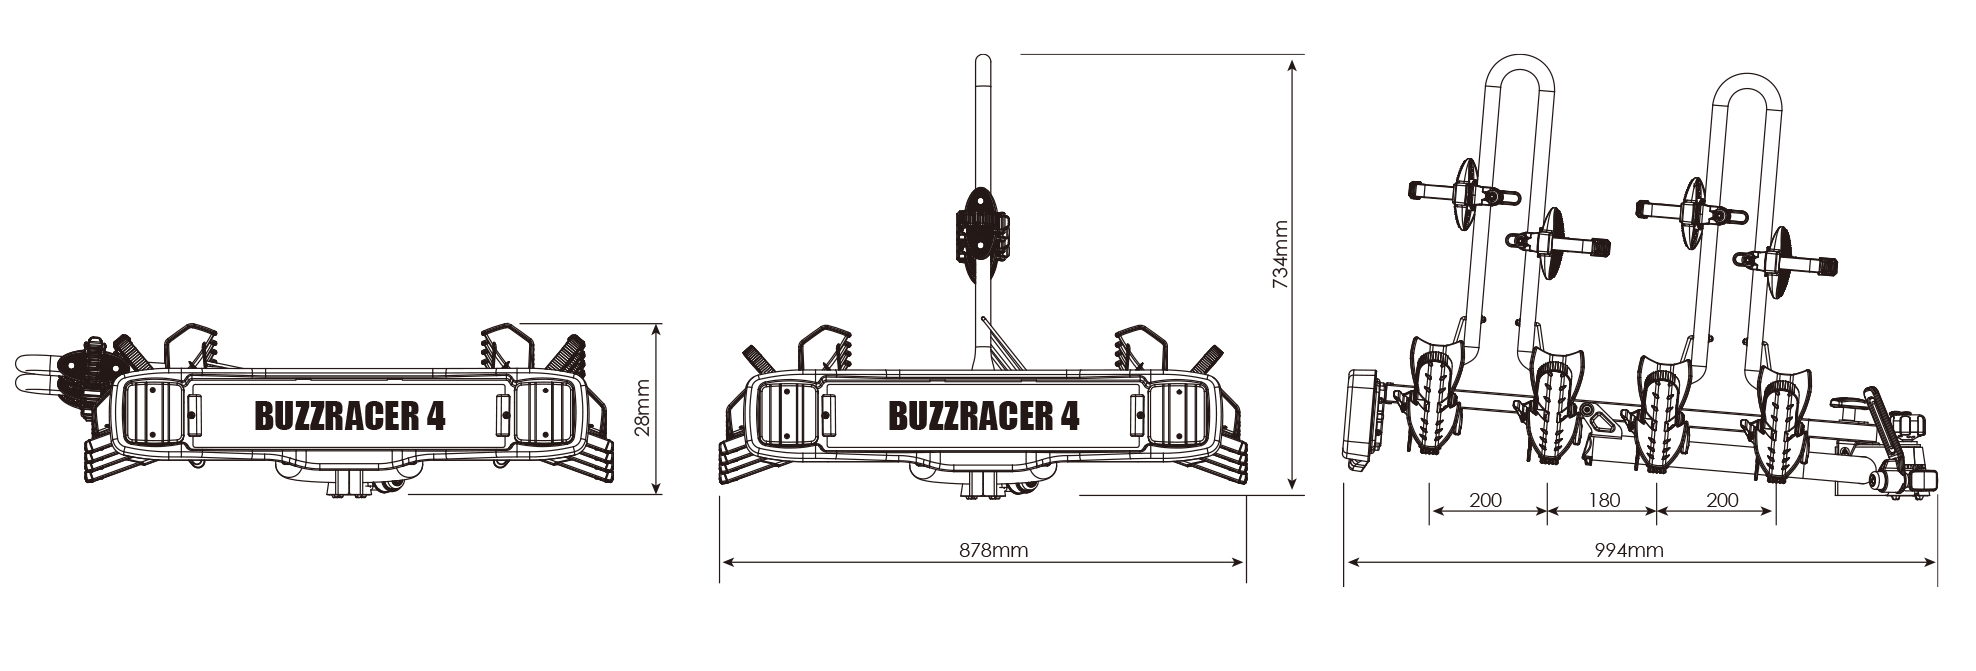 BUZZRACK BuzzRacer 4 technical specifications